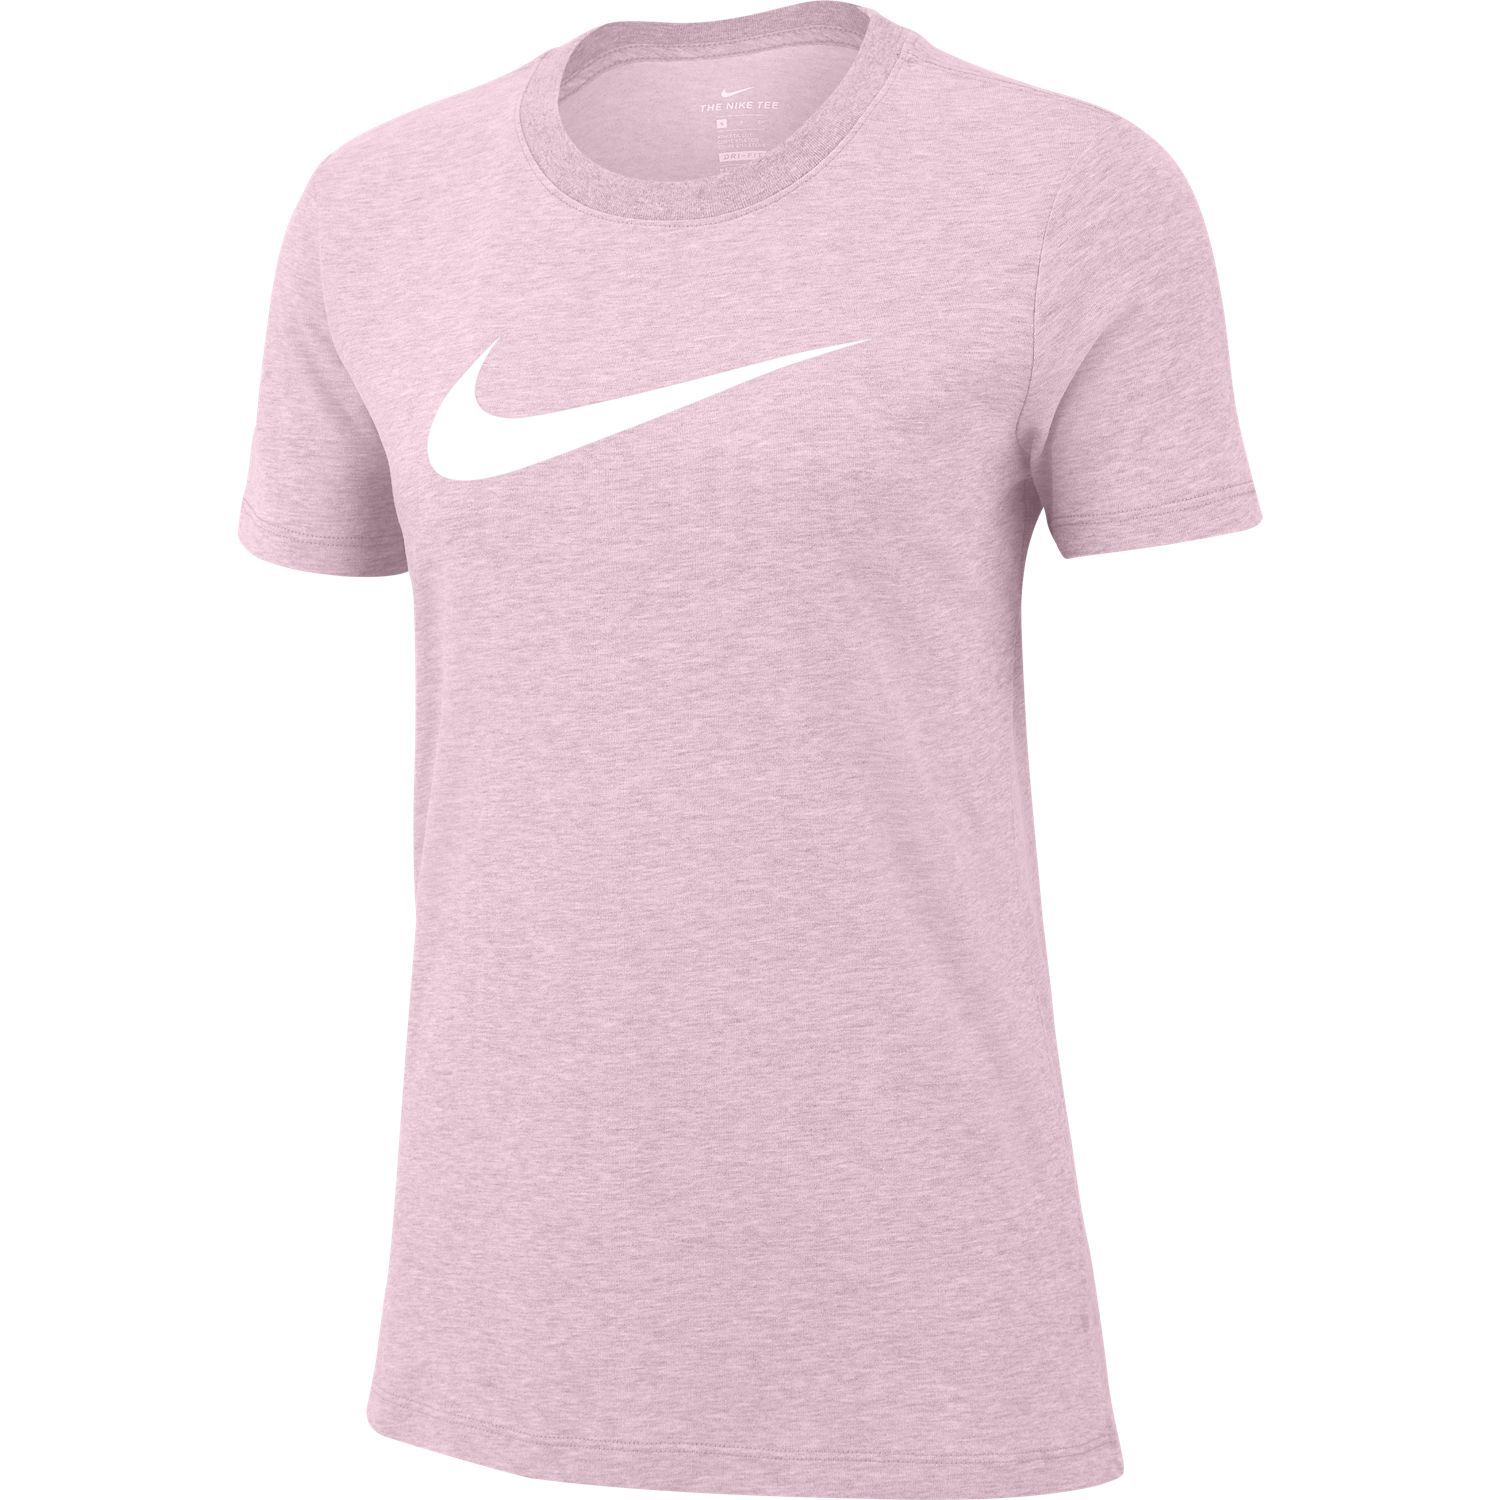 pink nike shirt womens